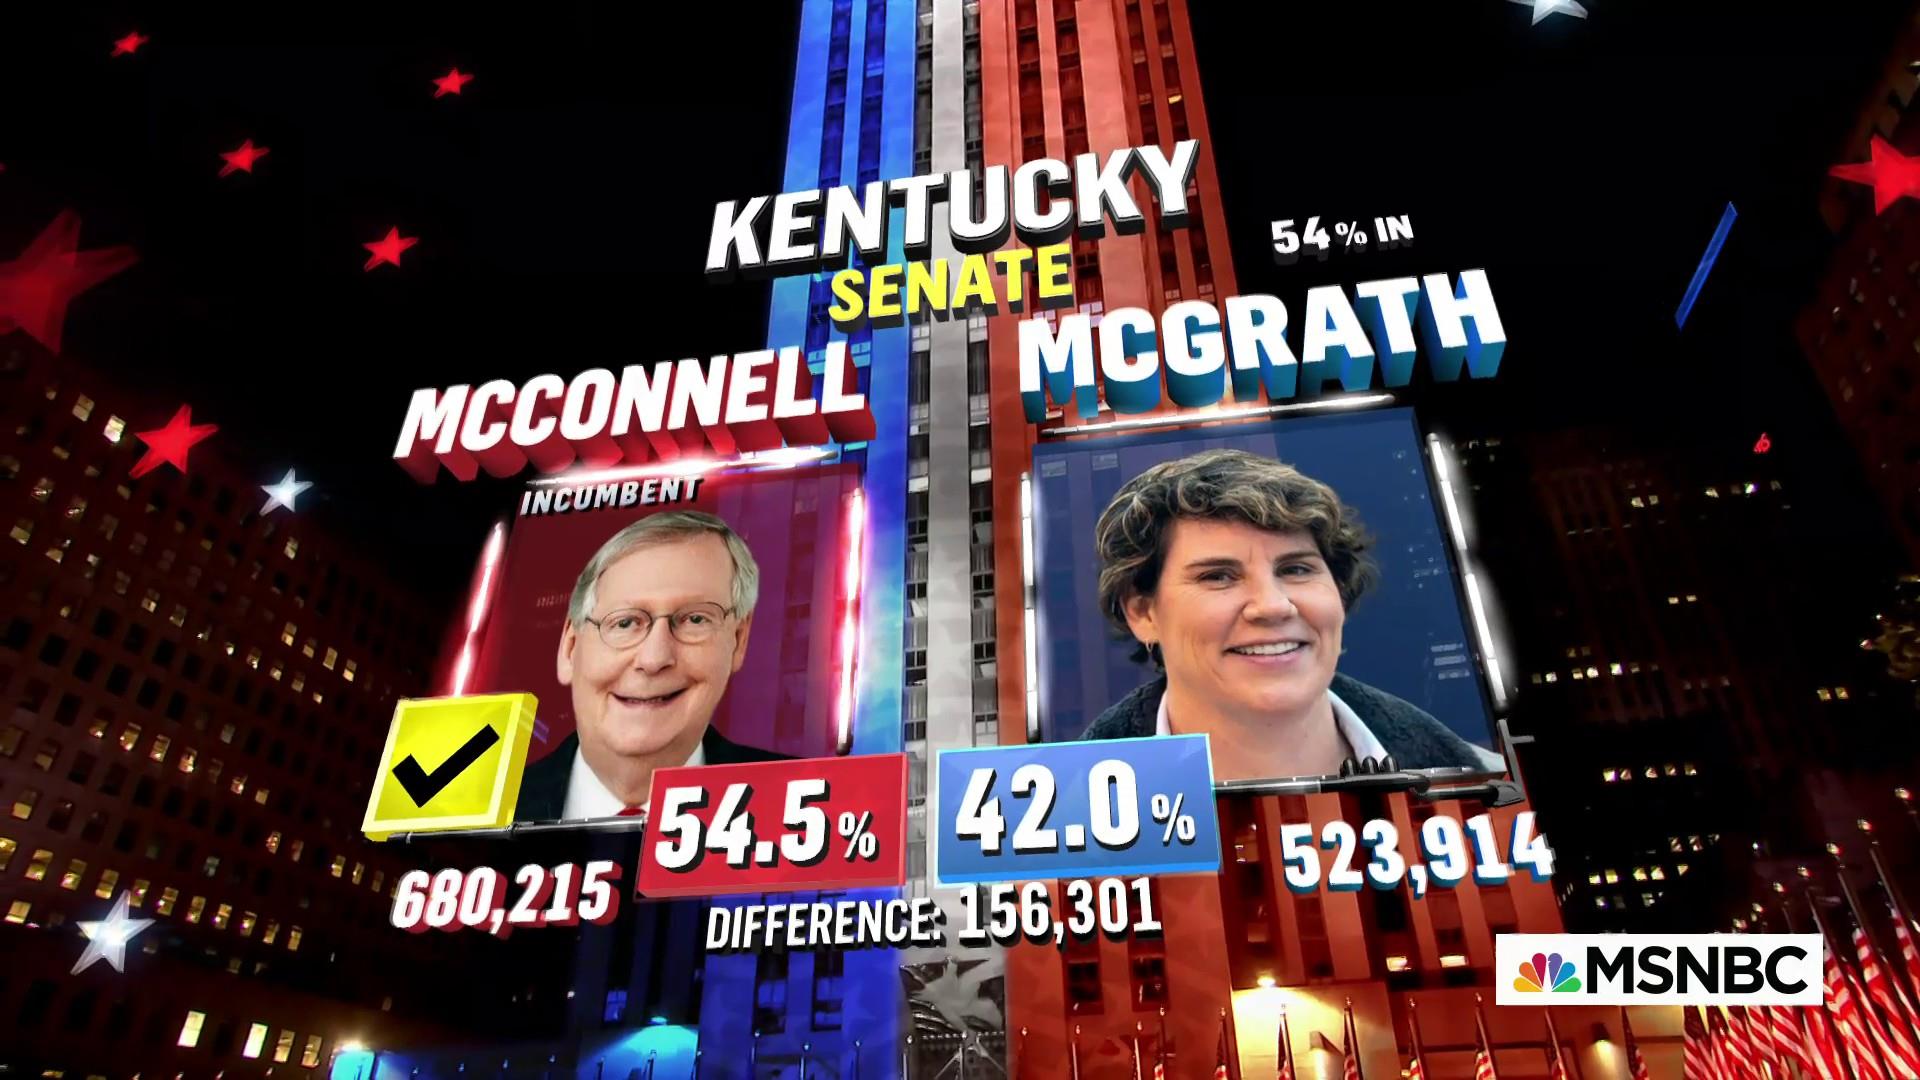 Mitch McConnell wins Kentucky Senate, NBC News initiatives